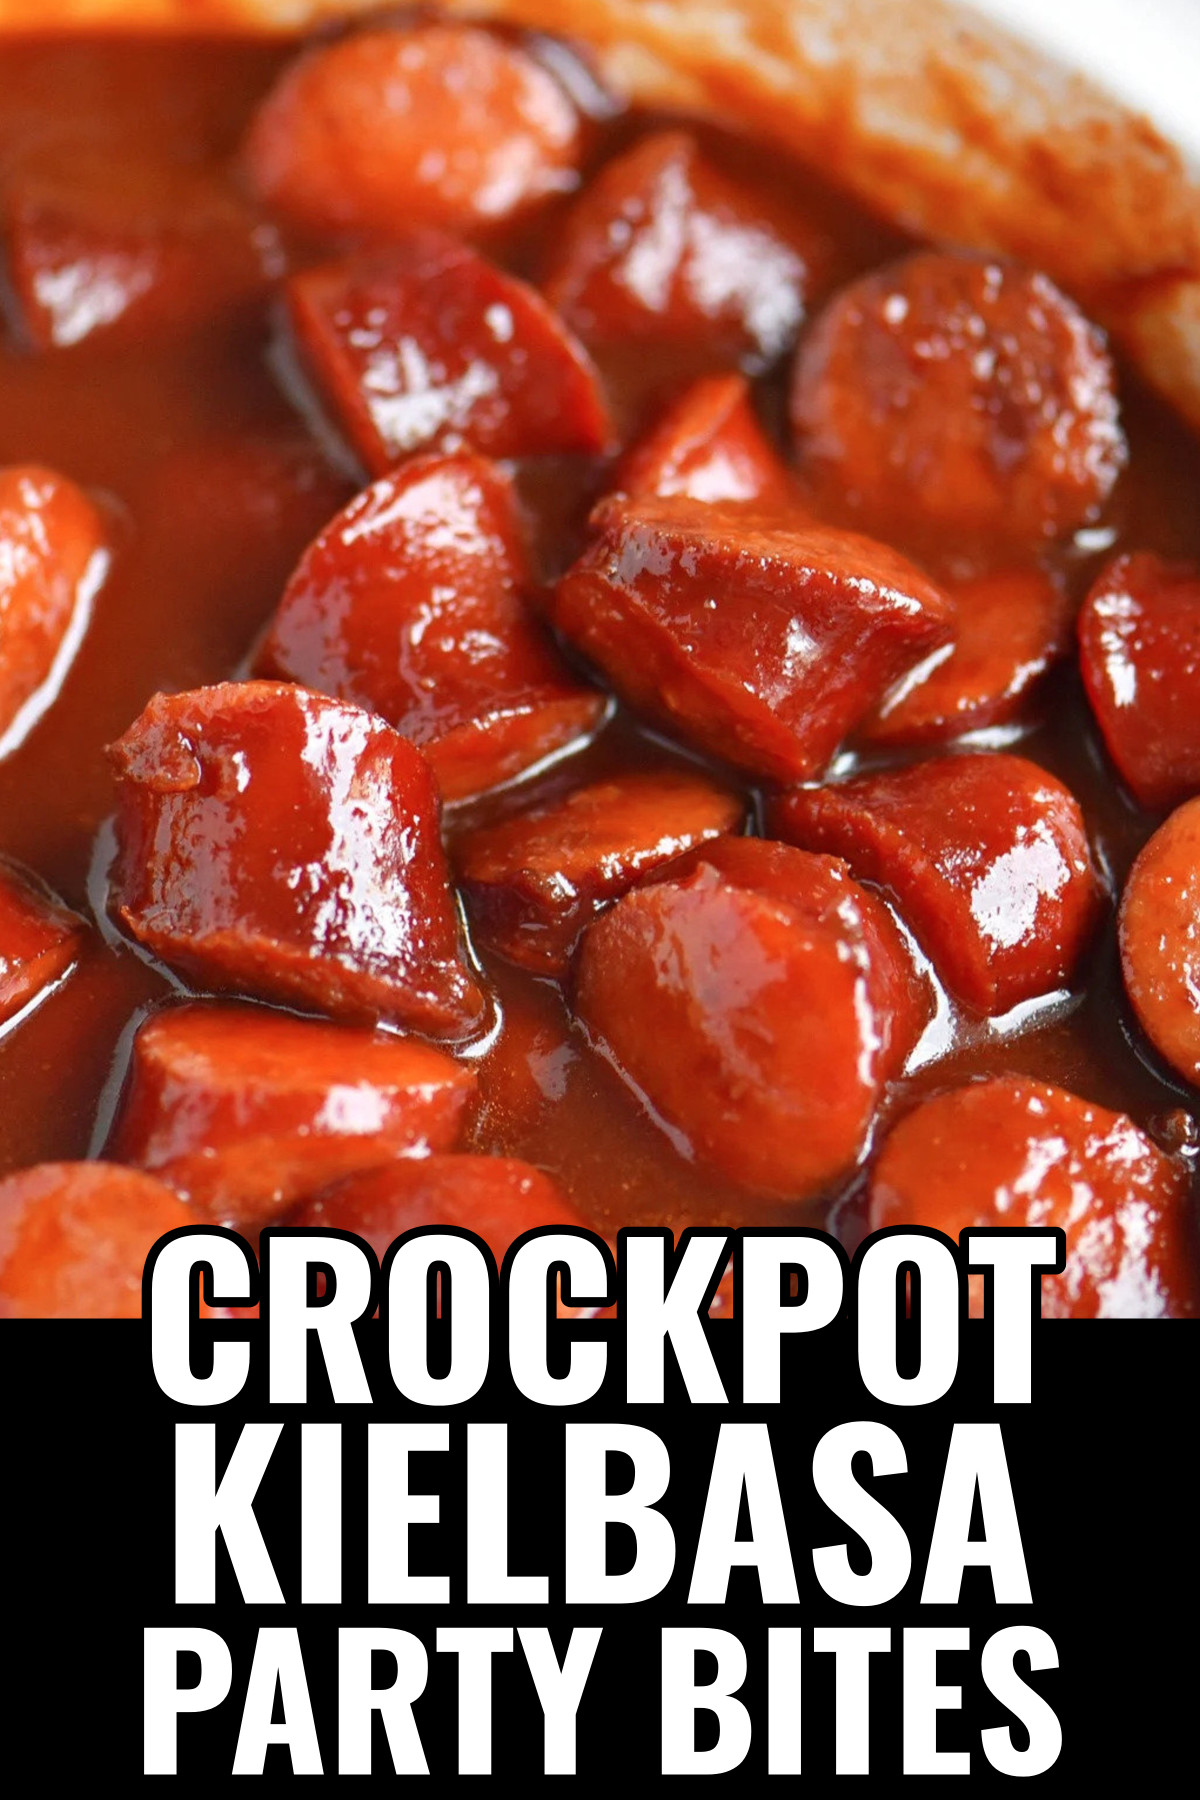 Crockpot Kielbasa Party Bites